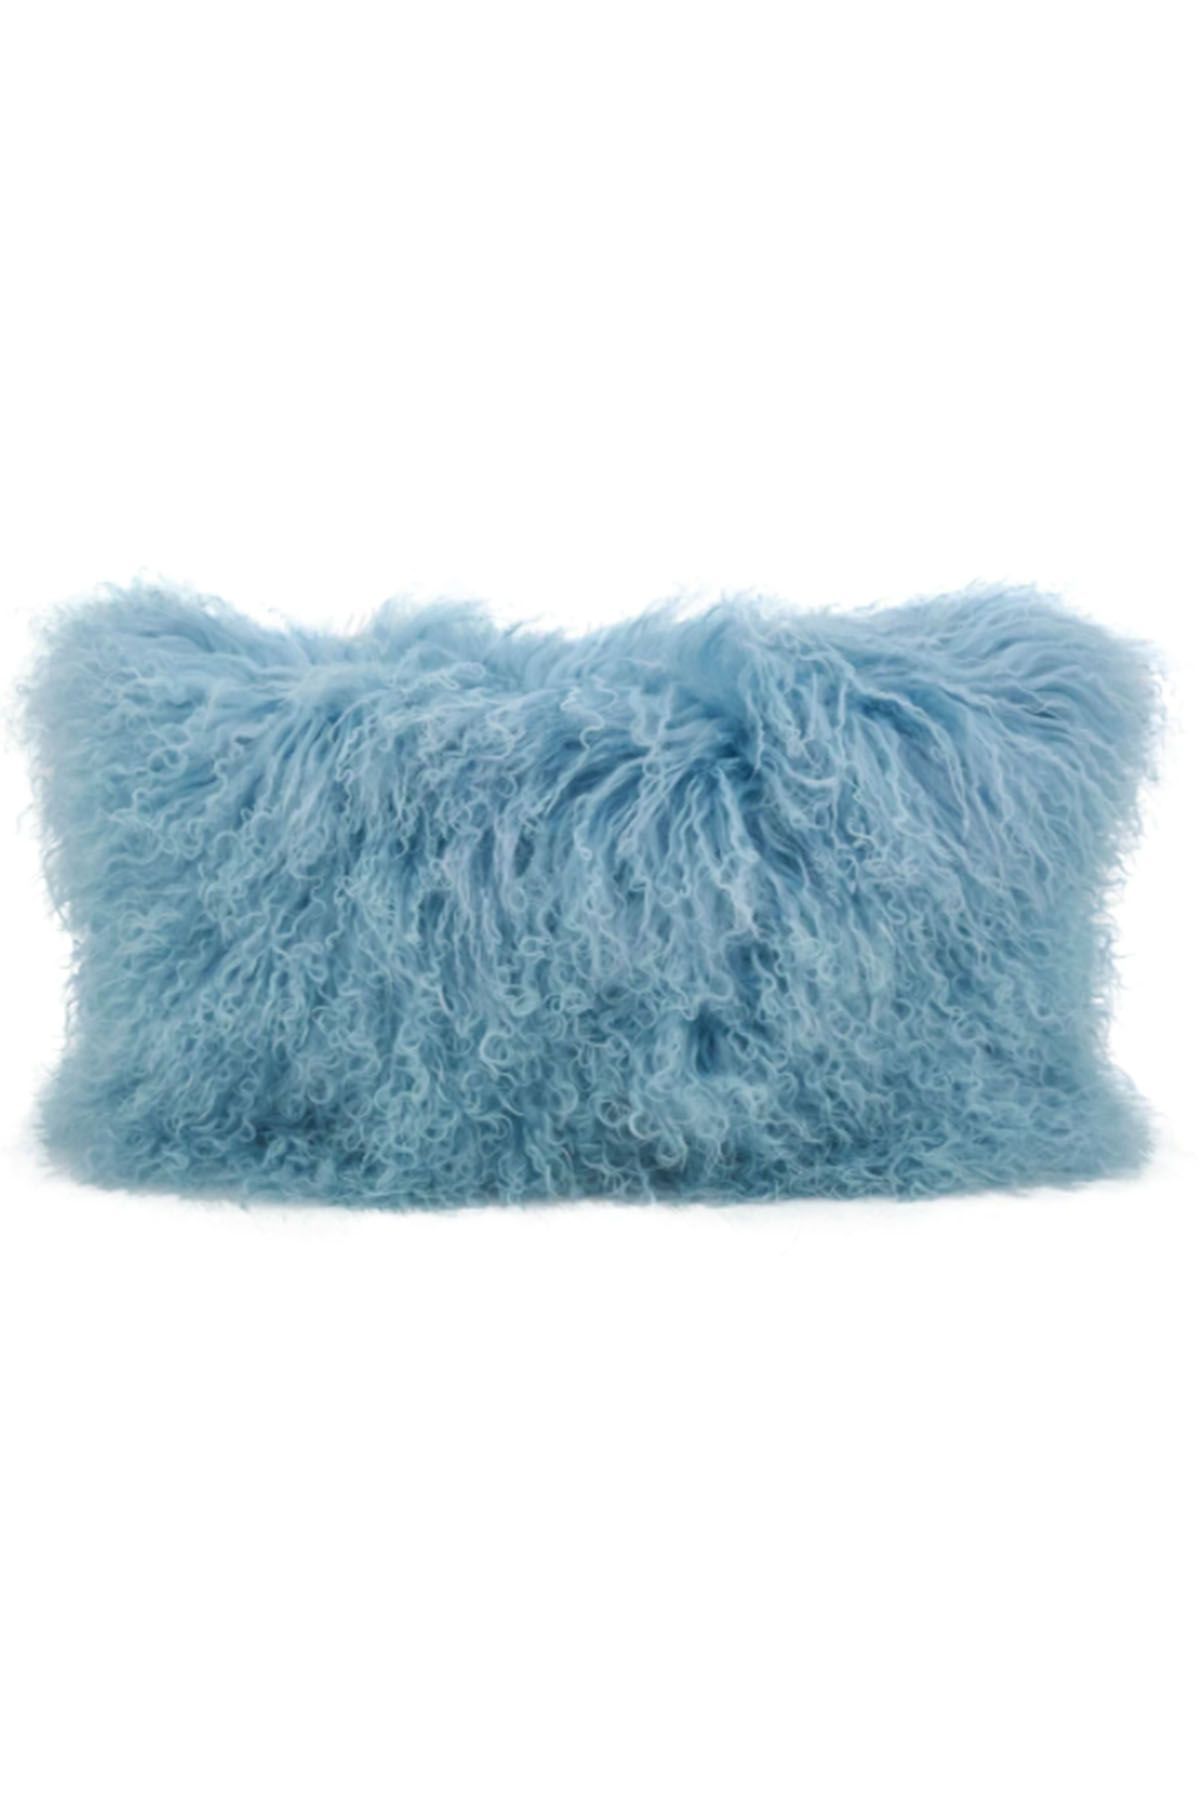 Wool Mongolian Lamb Fur 12 x 20 Decorative Throw Pillow 